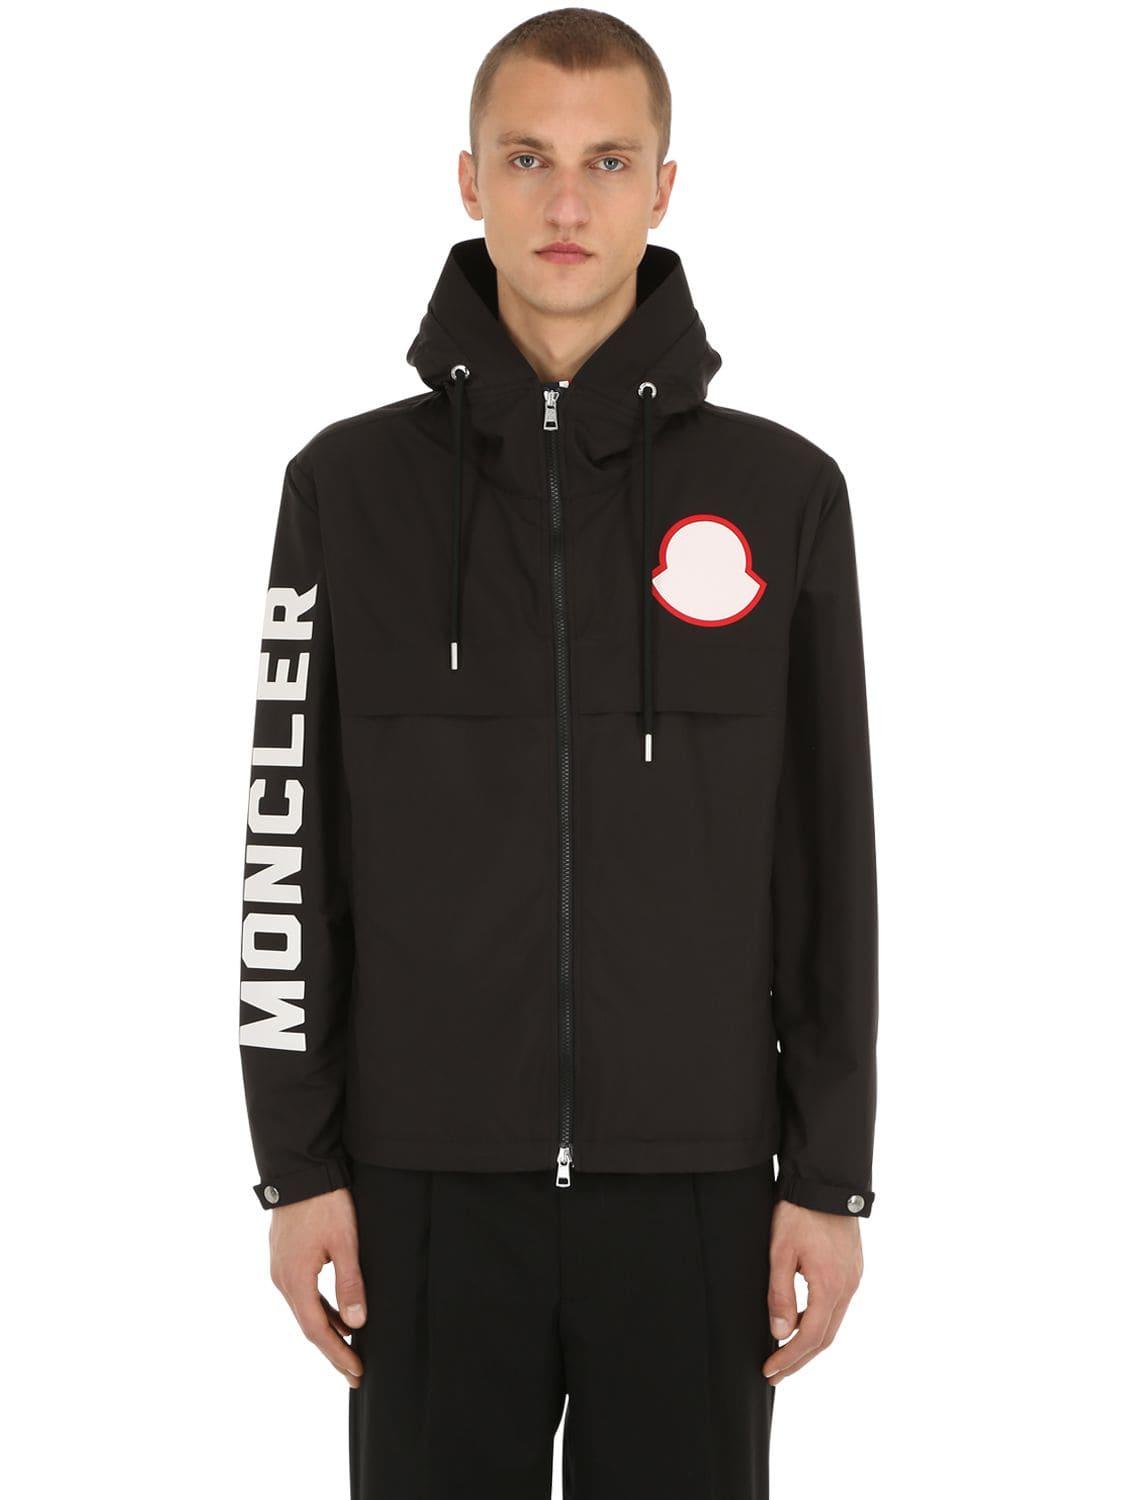 Moncler Montreal Jacket in Nero (Black) for Men - Lyst